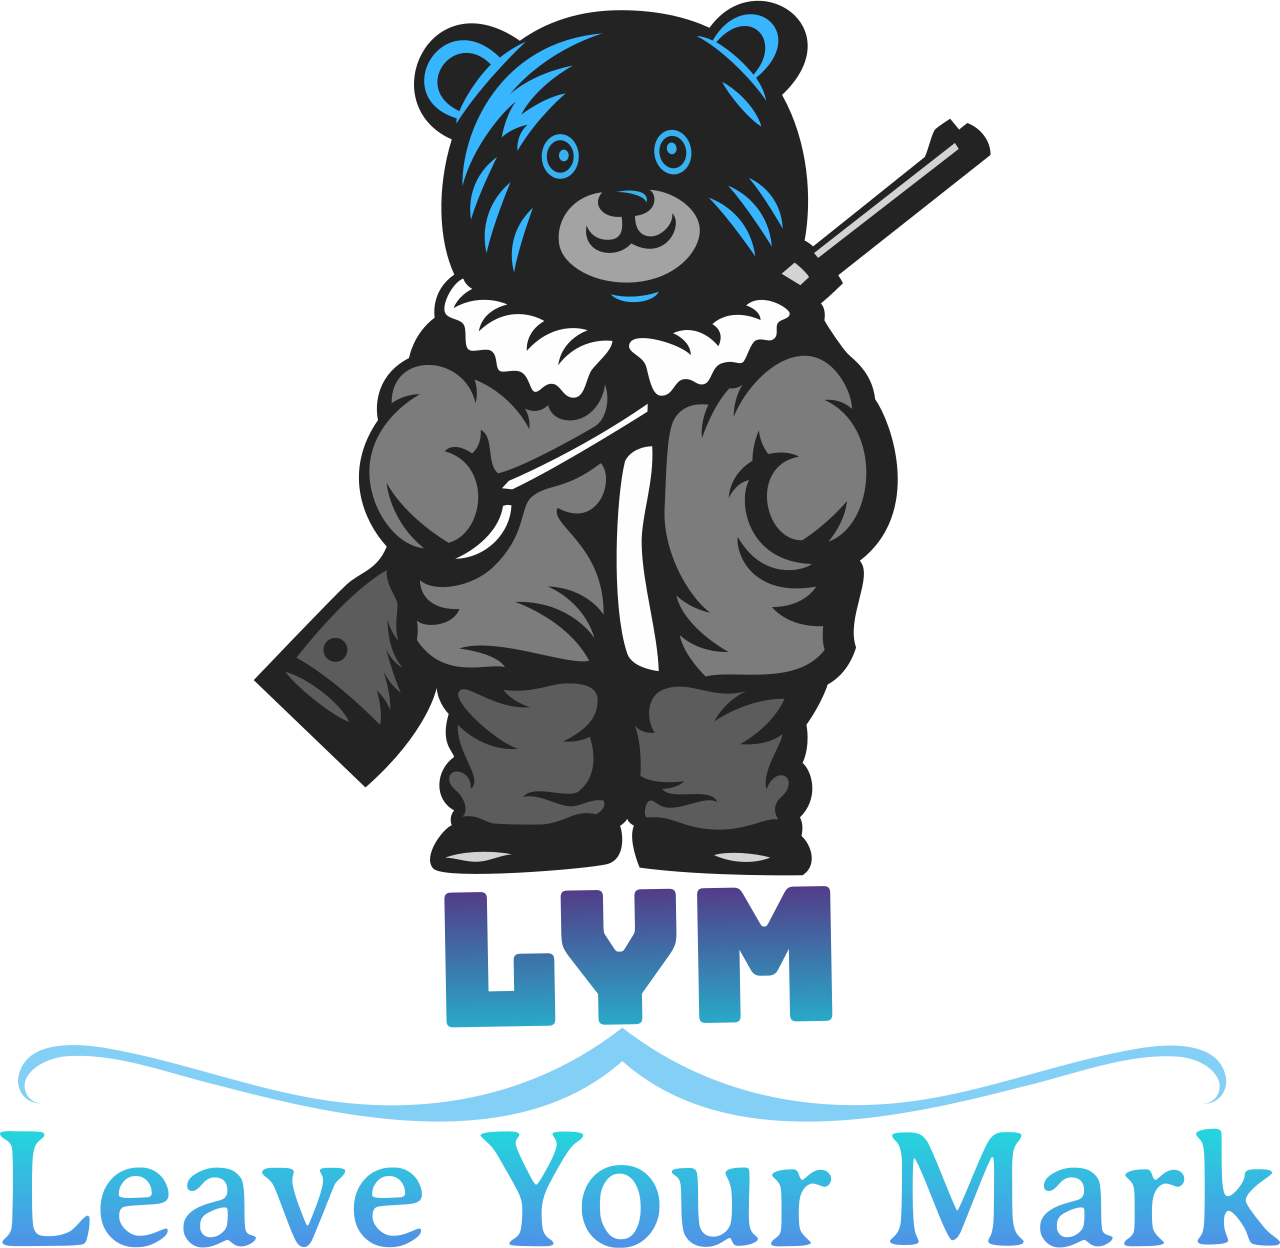 LYM's web page